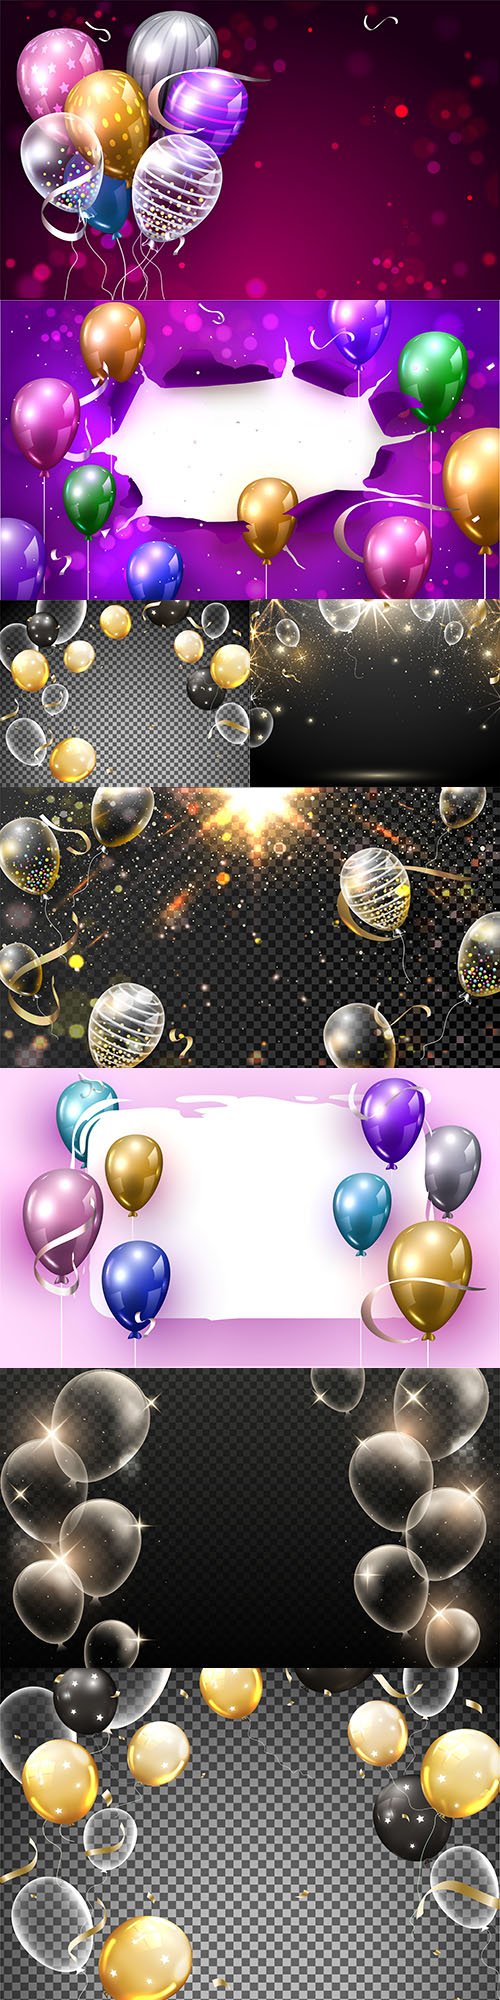 Realistic balloons for birthday invitation design